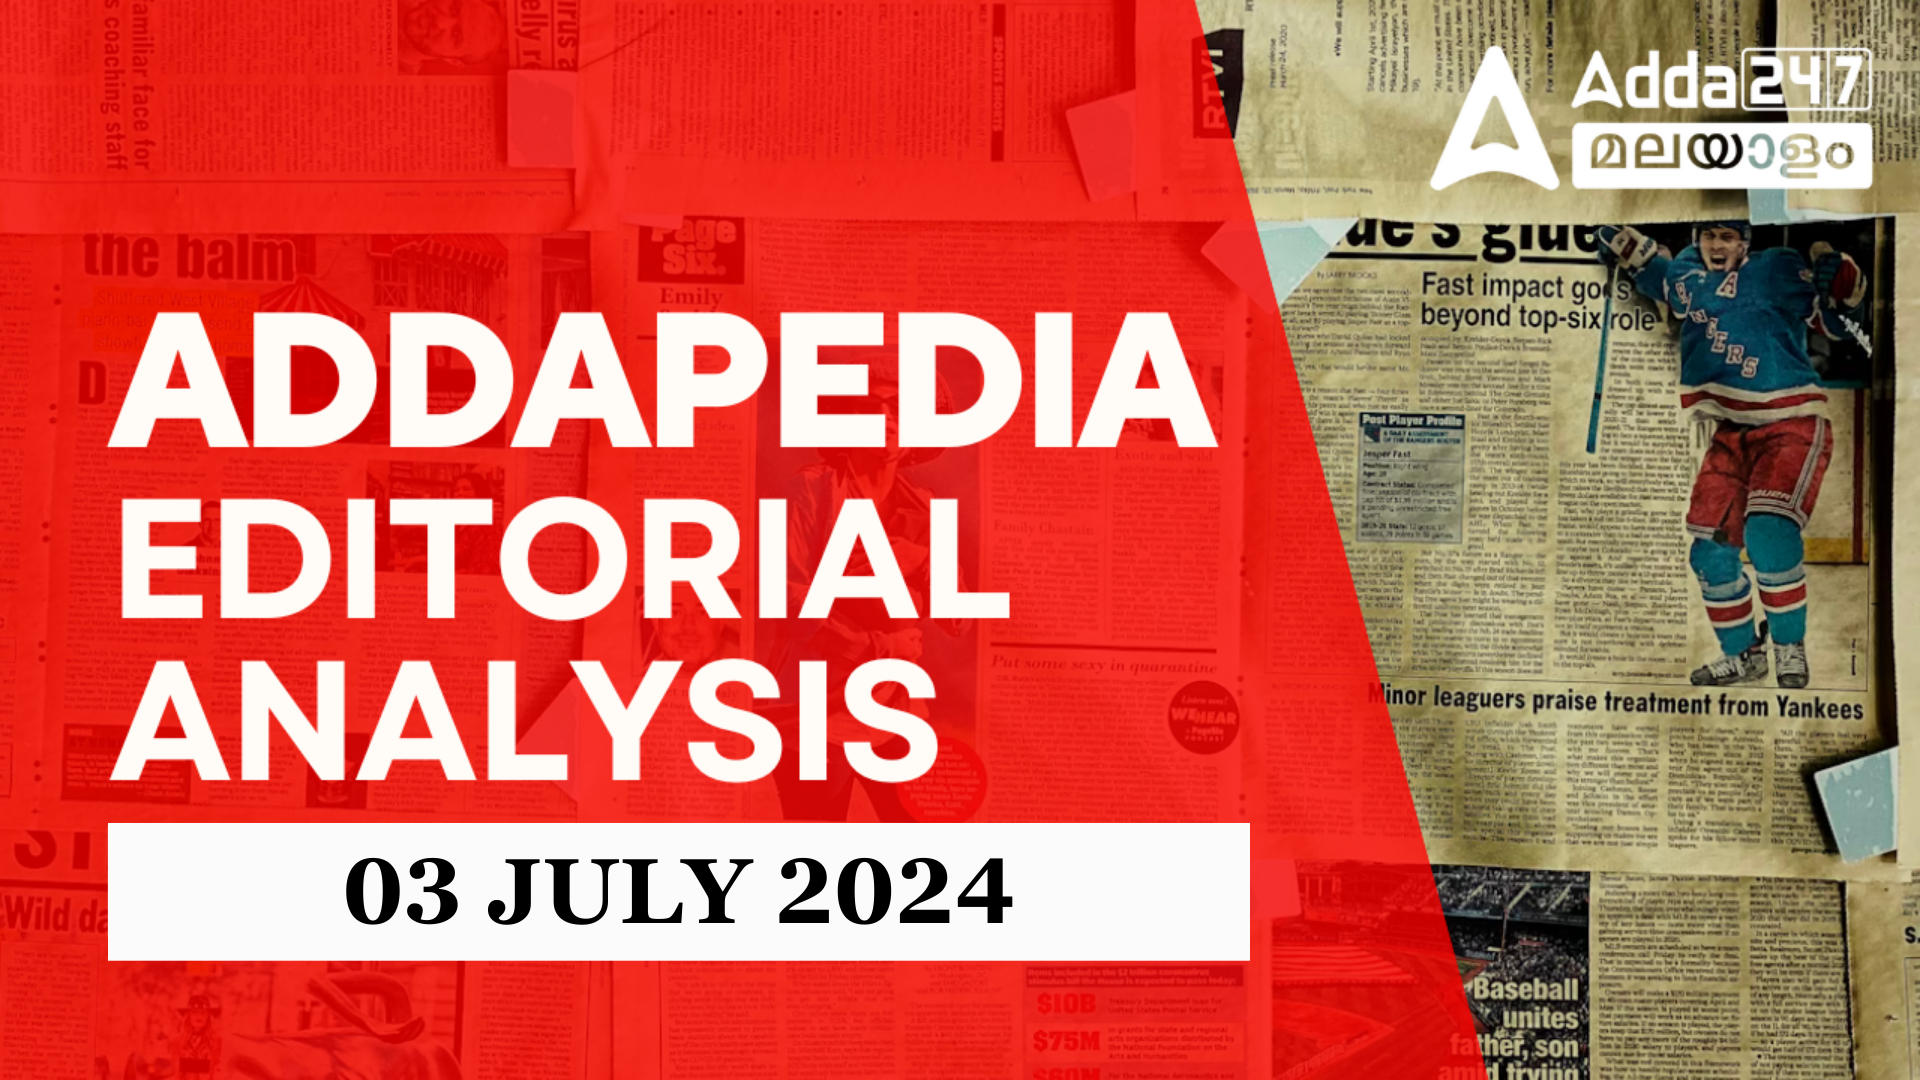 Addapedia Editorial Analysis: Daily News Editorial PDF, 03 July 2024